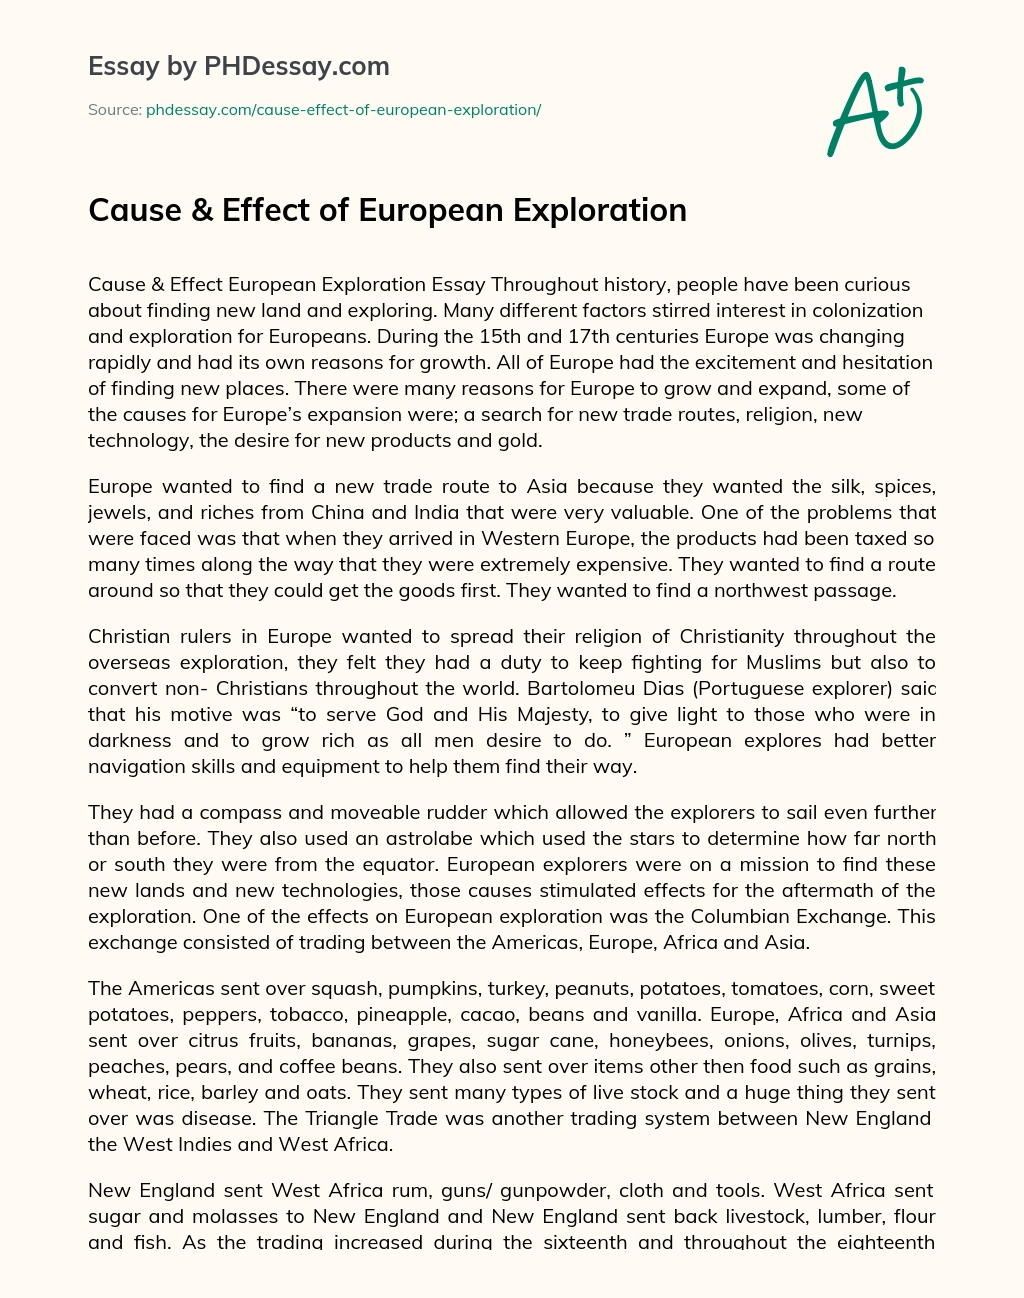 Cause & Effect of European Exploration essay